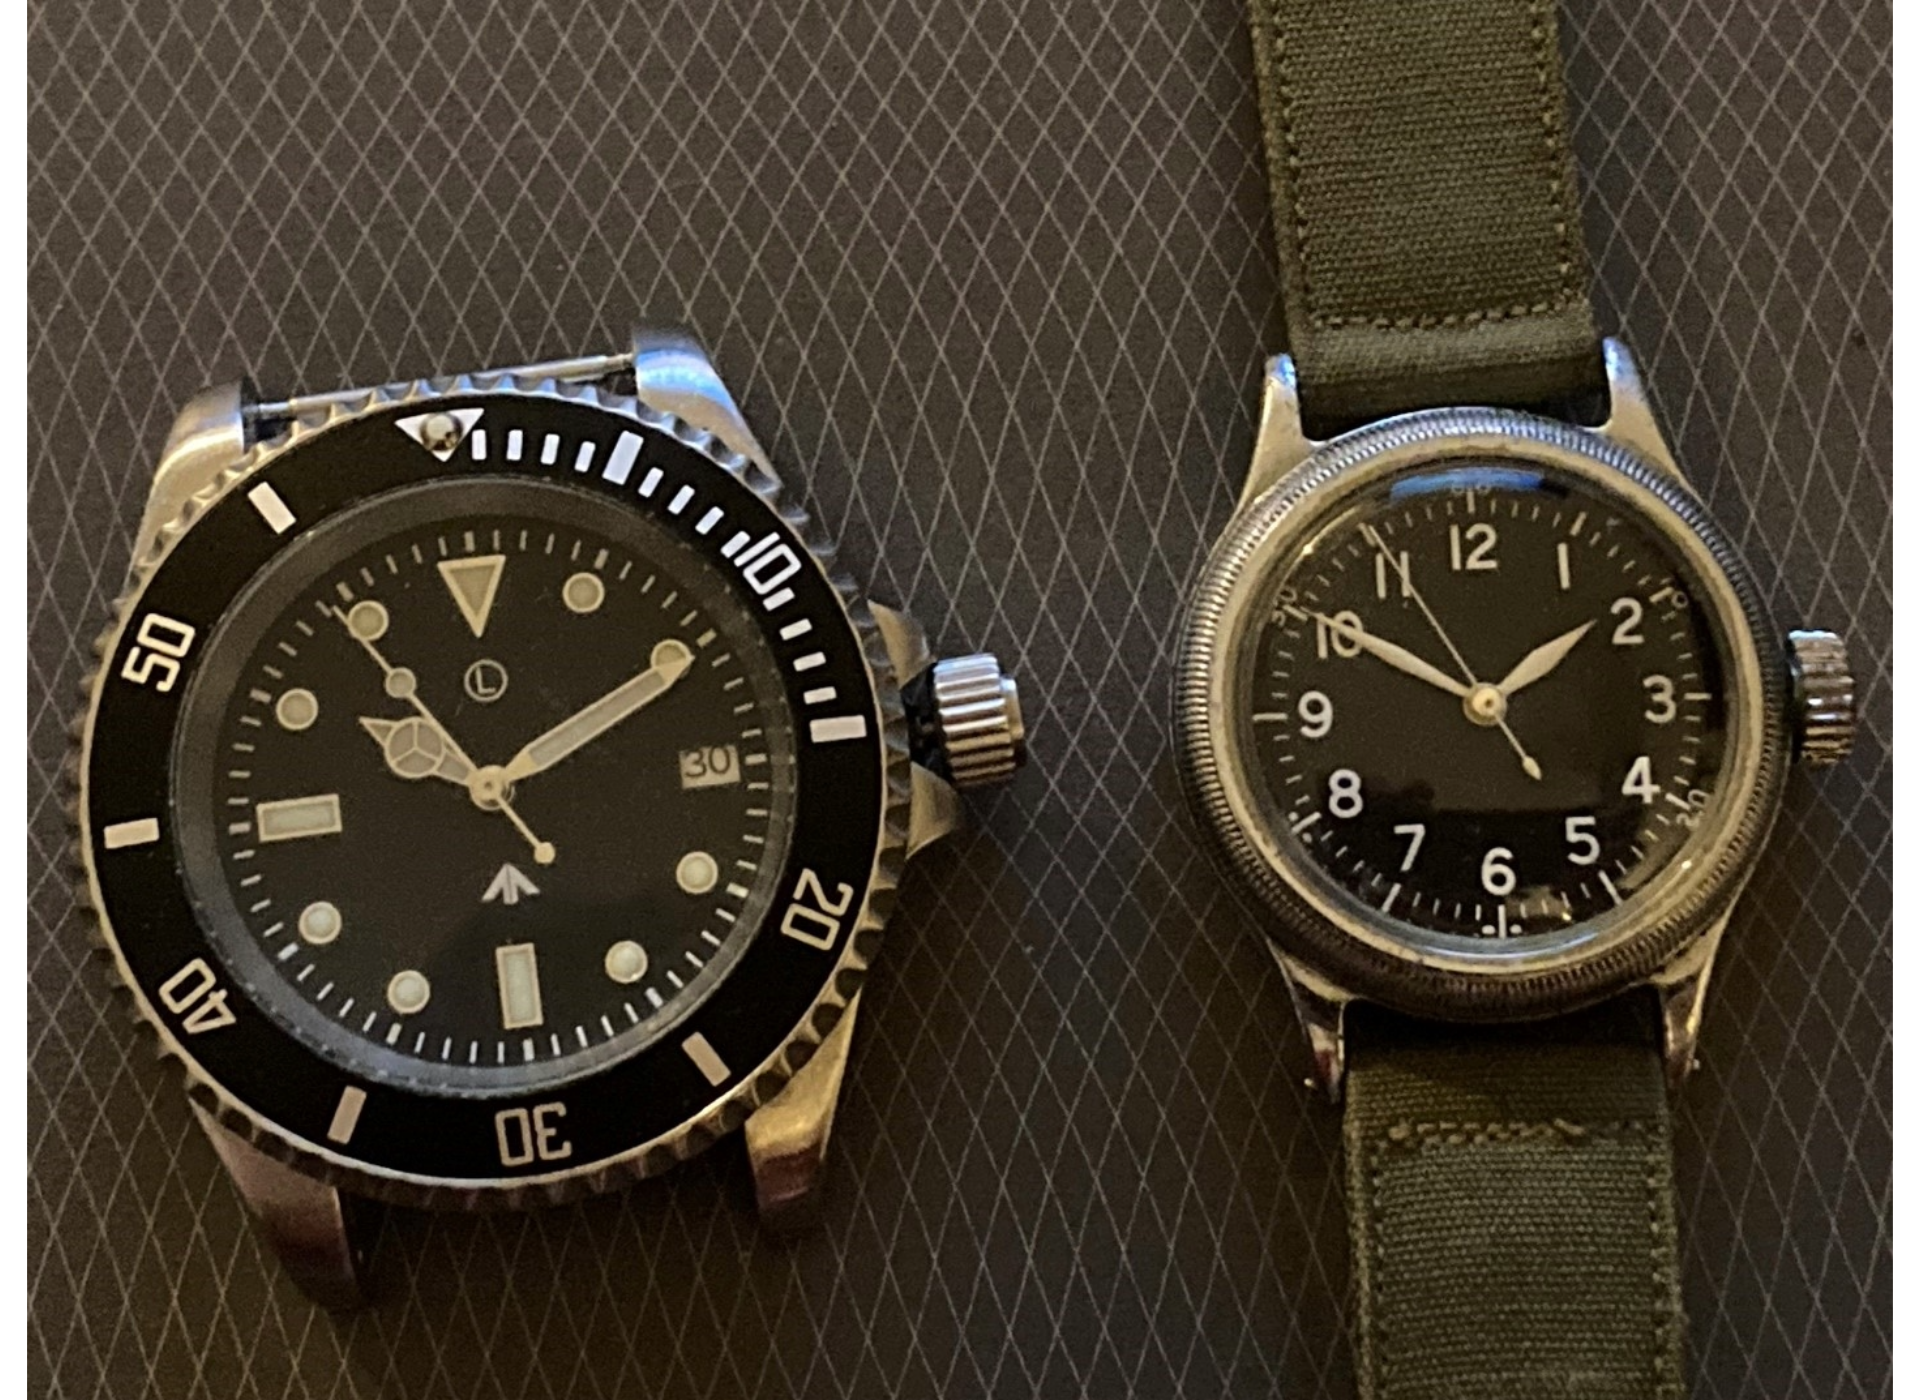 Rolex Submariner watch compared to a 1944 Bulova A-11